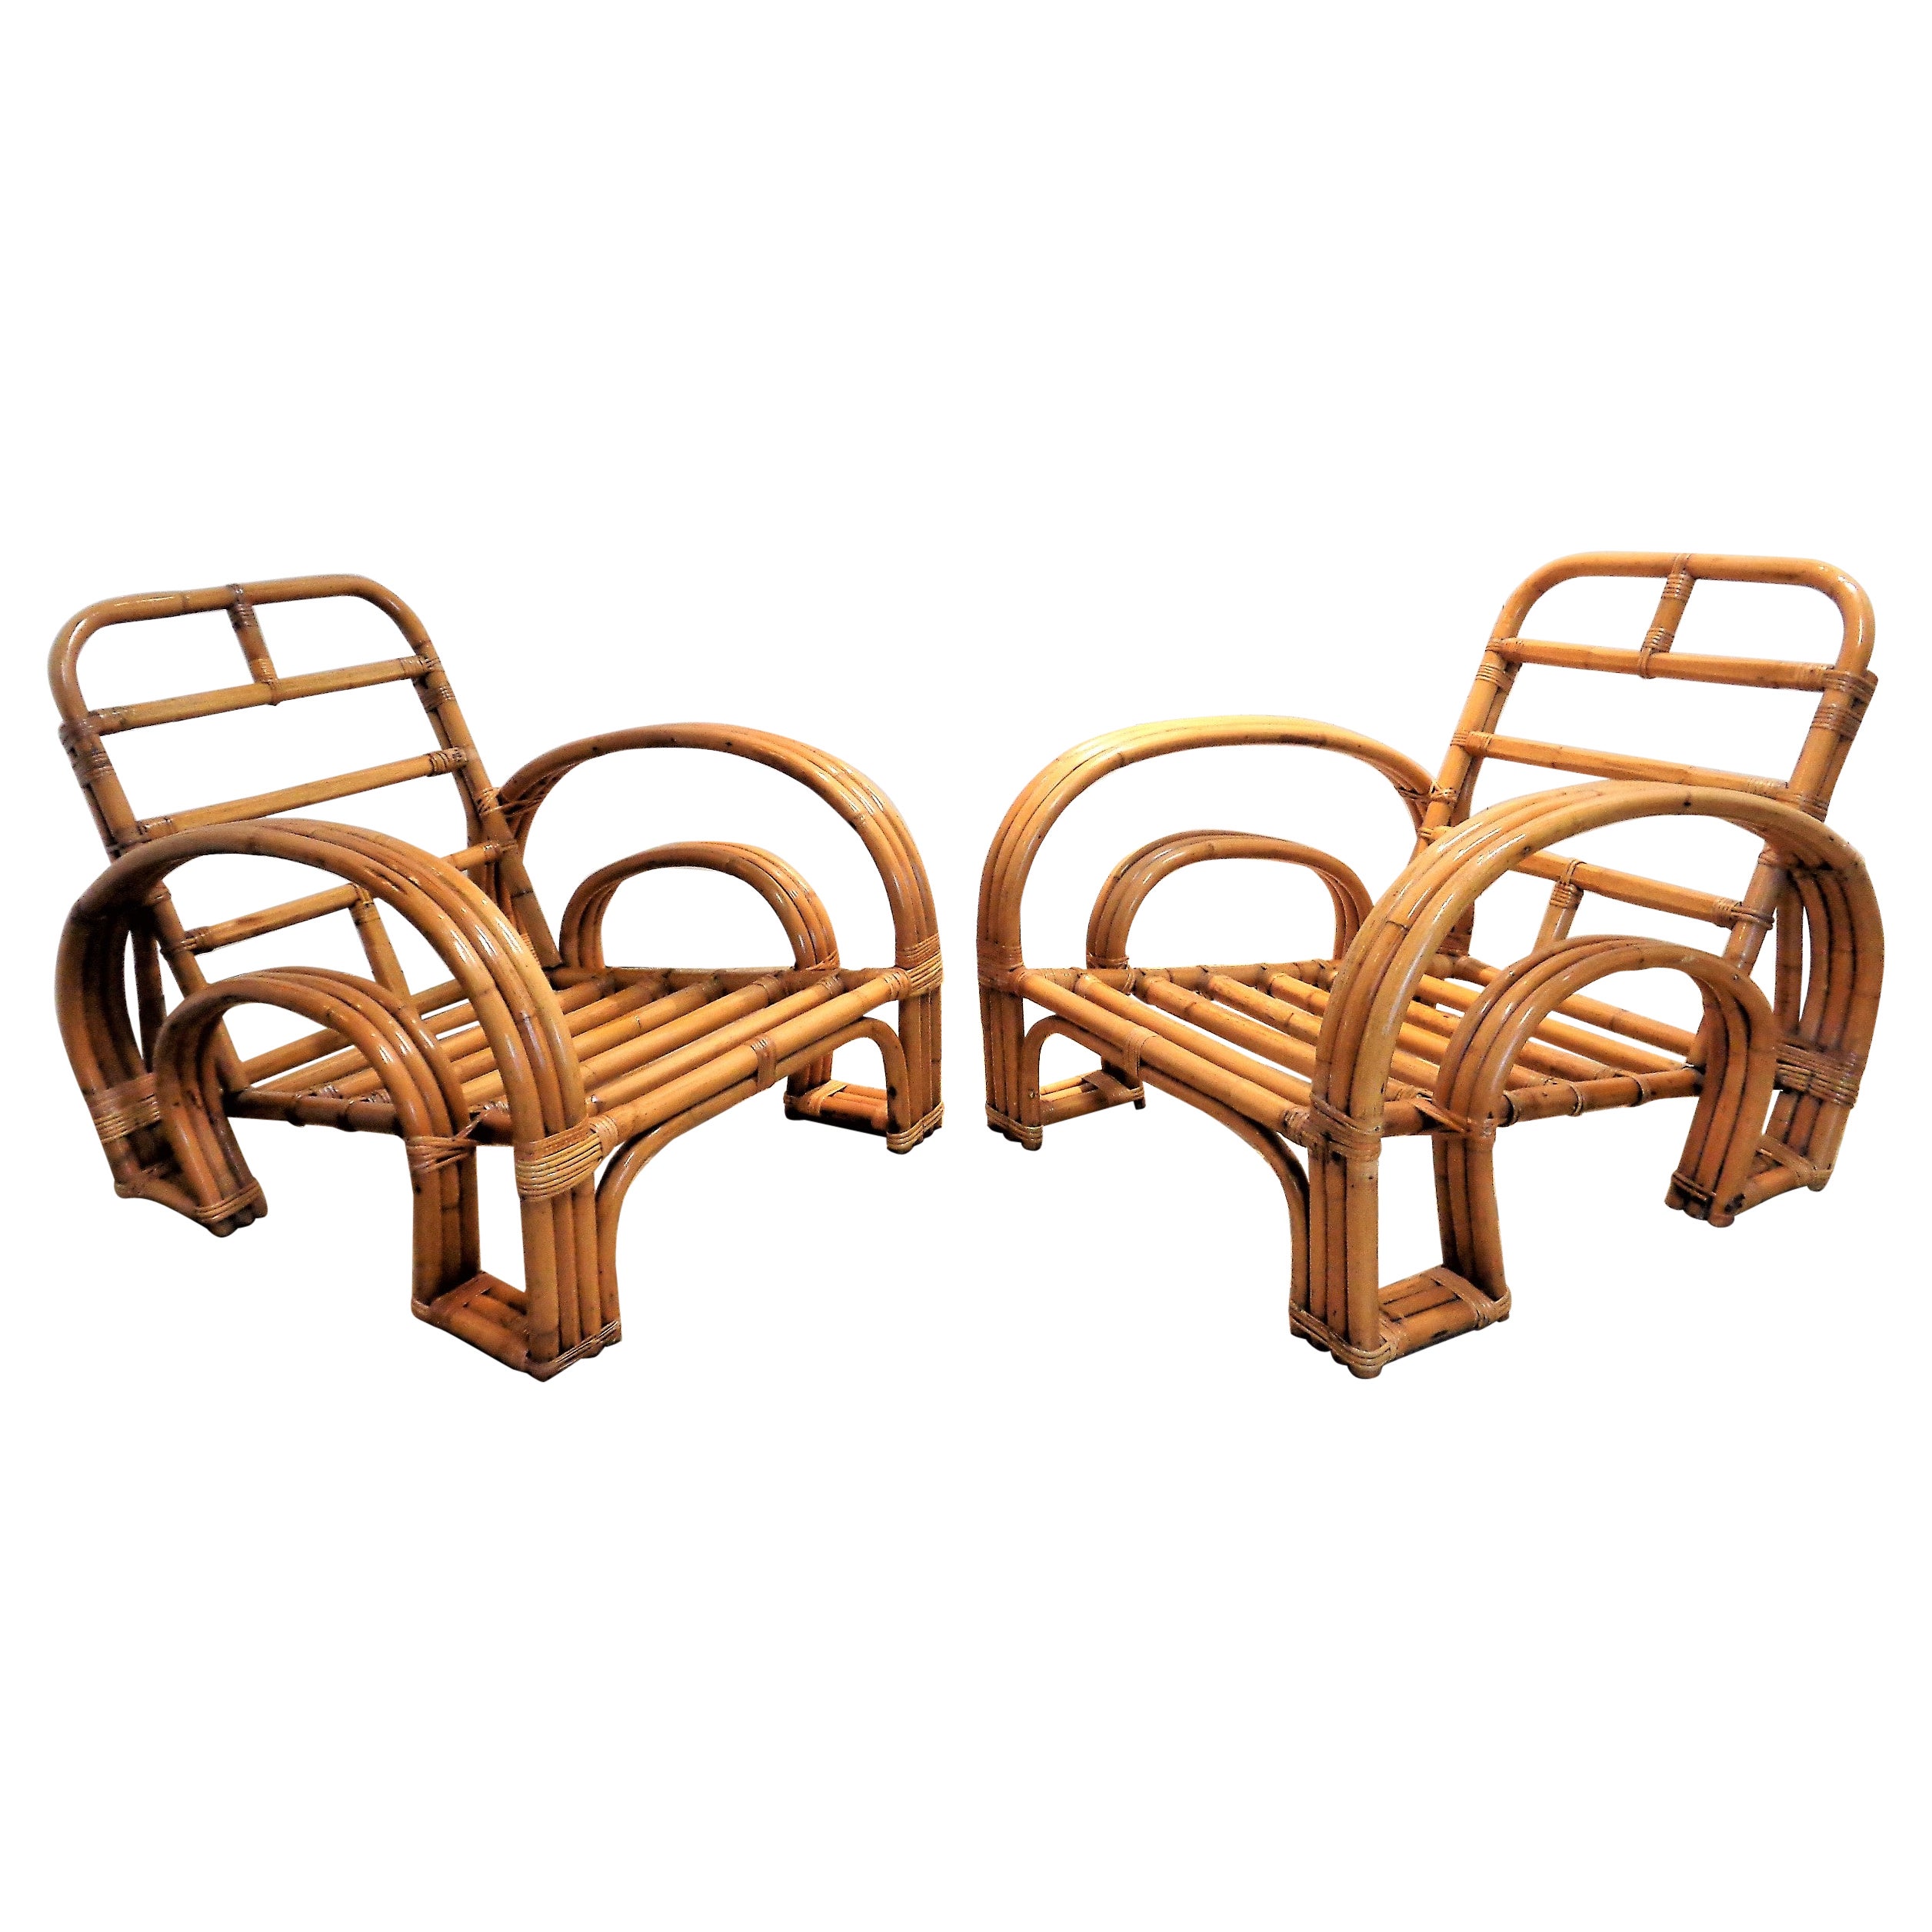  Rattan Double Horseshoe Lounge Chairs